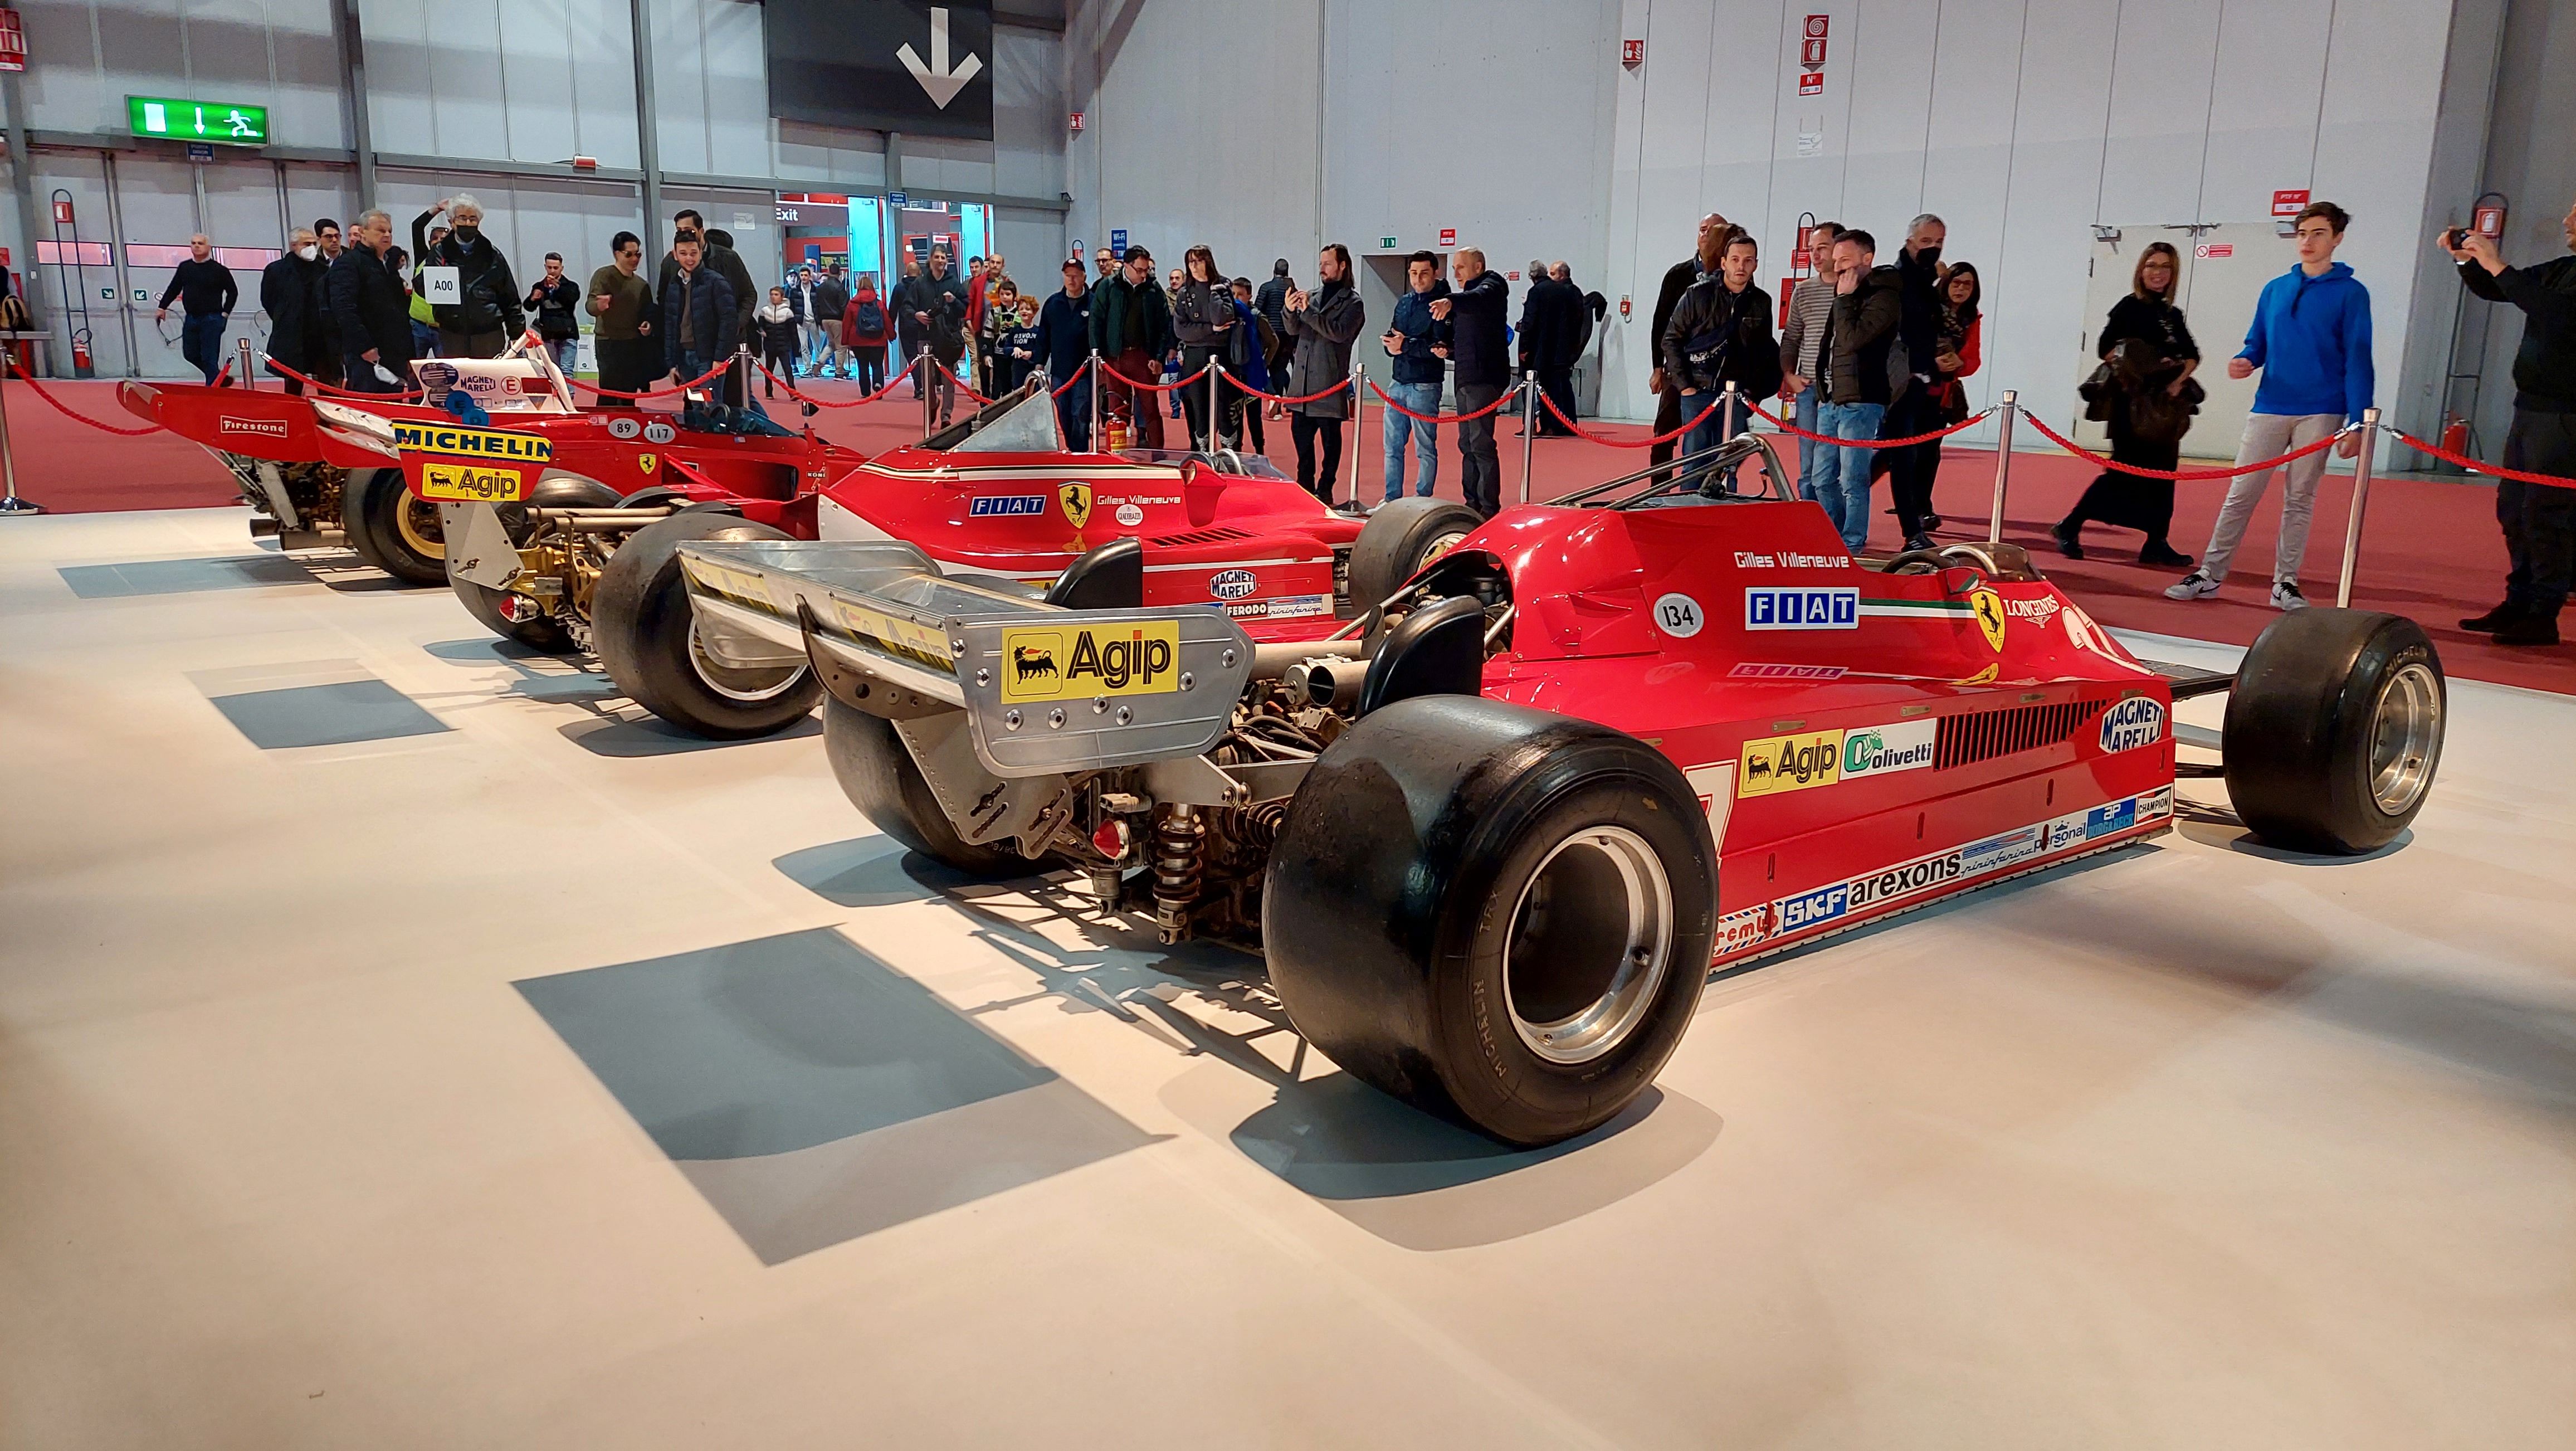 Three Ferrari F1 cars from the 70s aligned at Milano Autoclassica